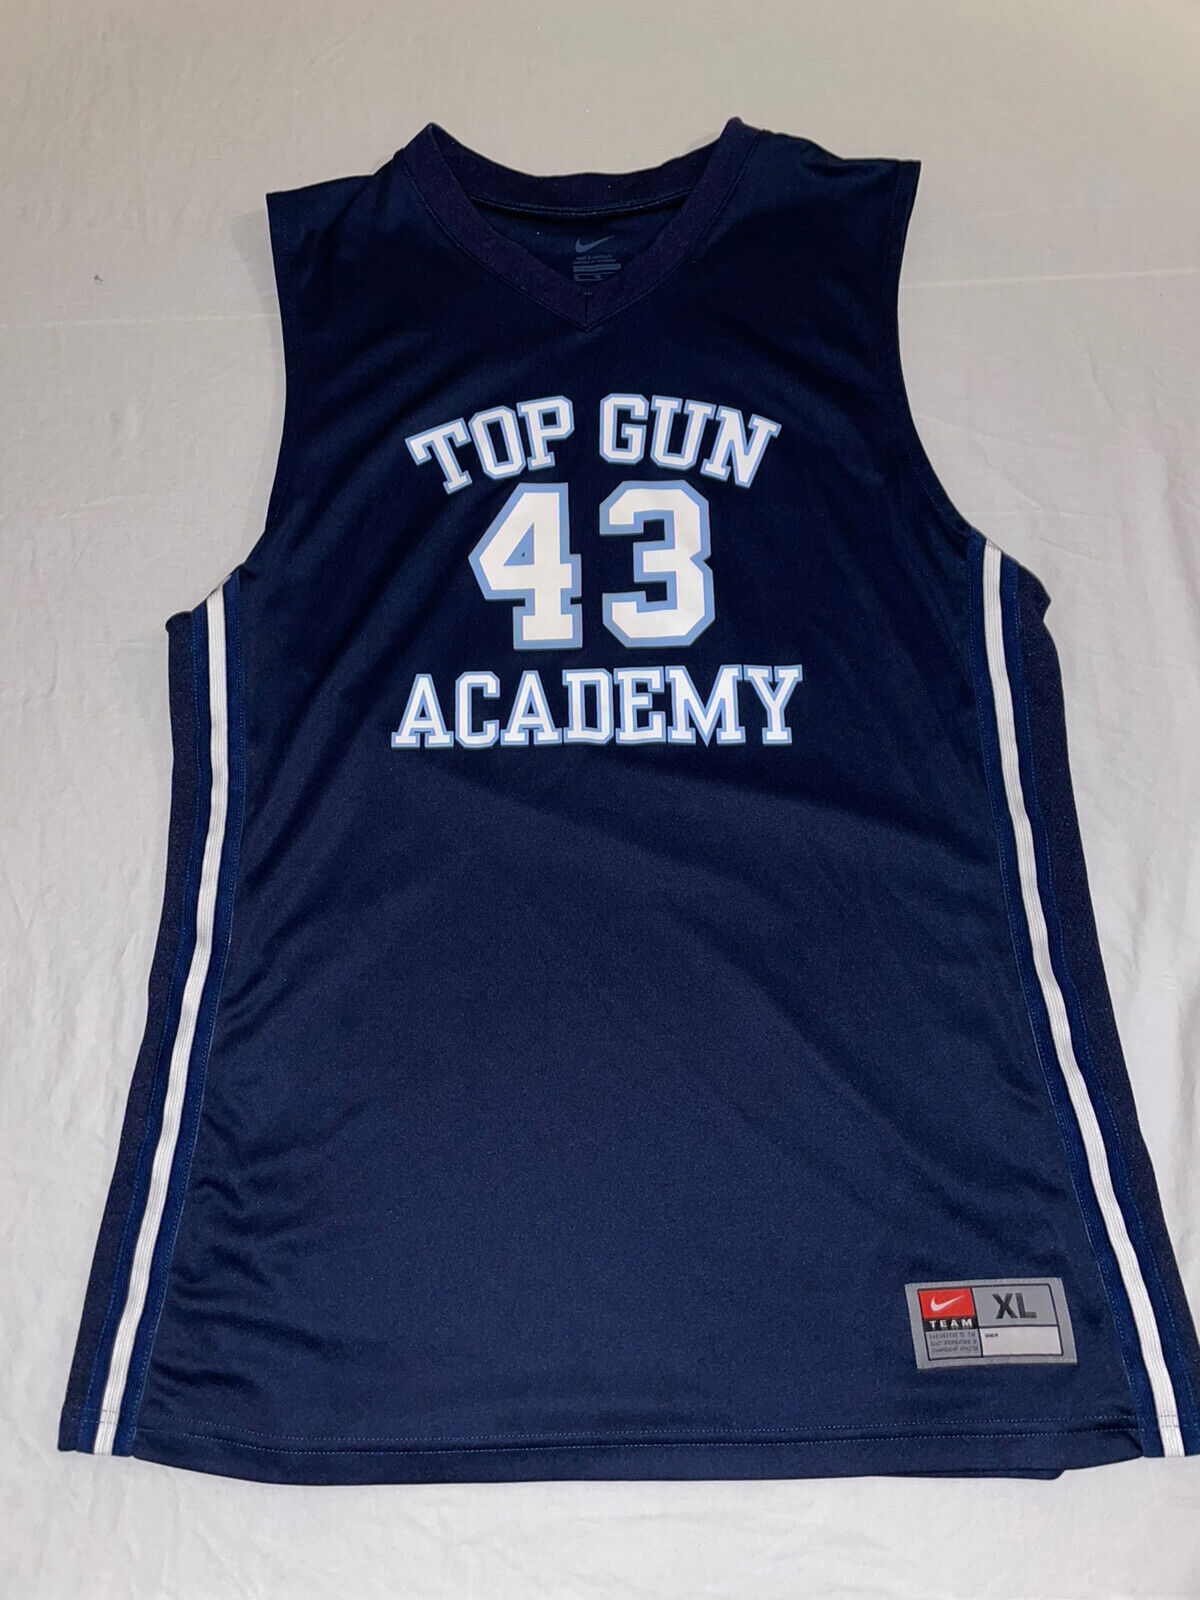 Nike Team “Top Gun Academy” basketball Size 5 ☆ very popular Mens XL Blue jersey Industry No. 1